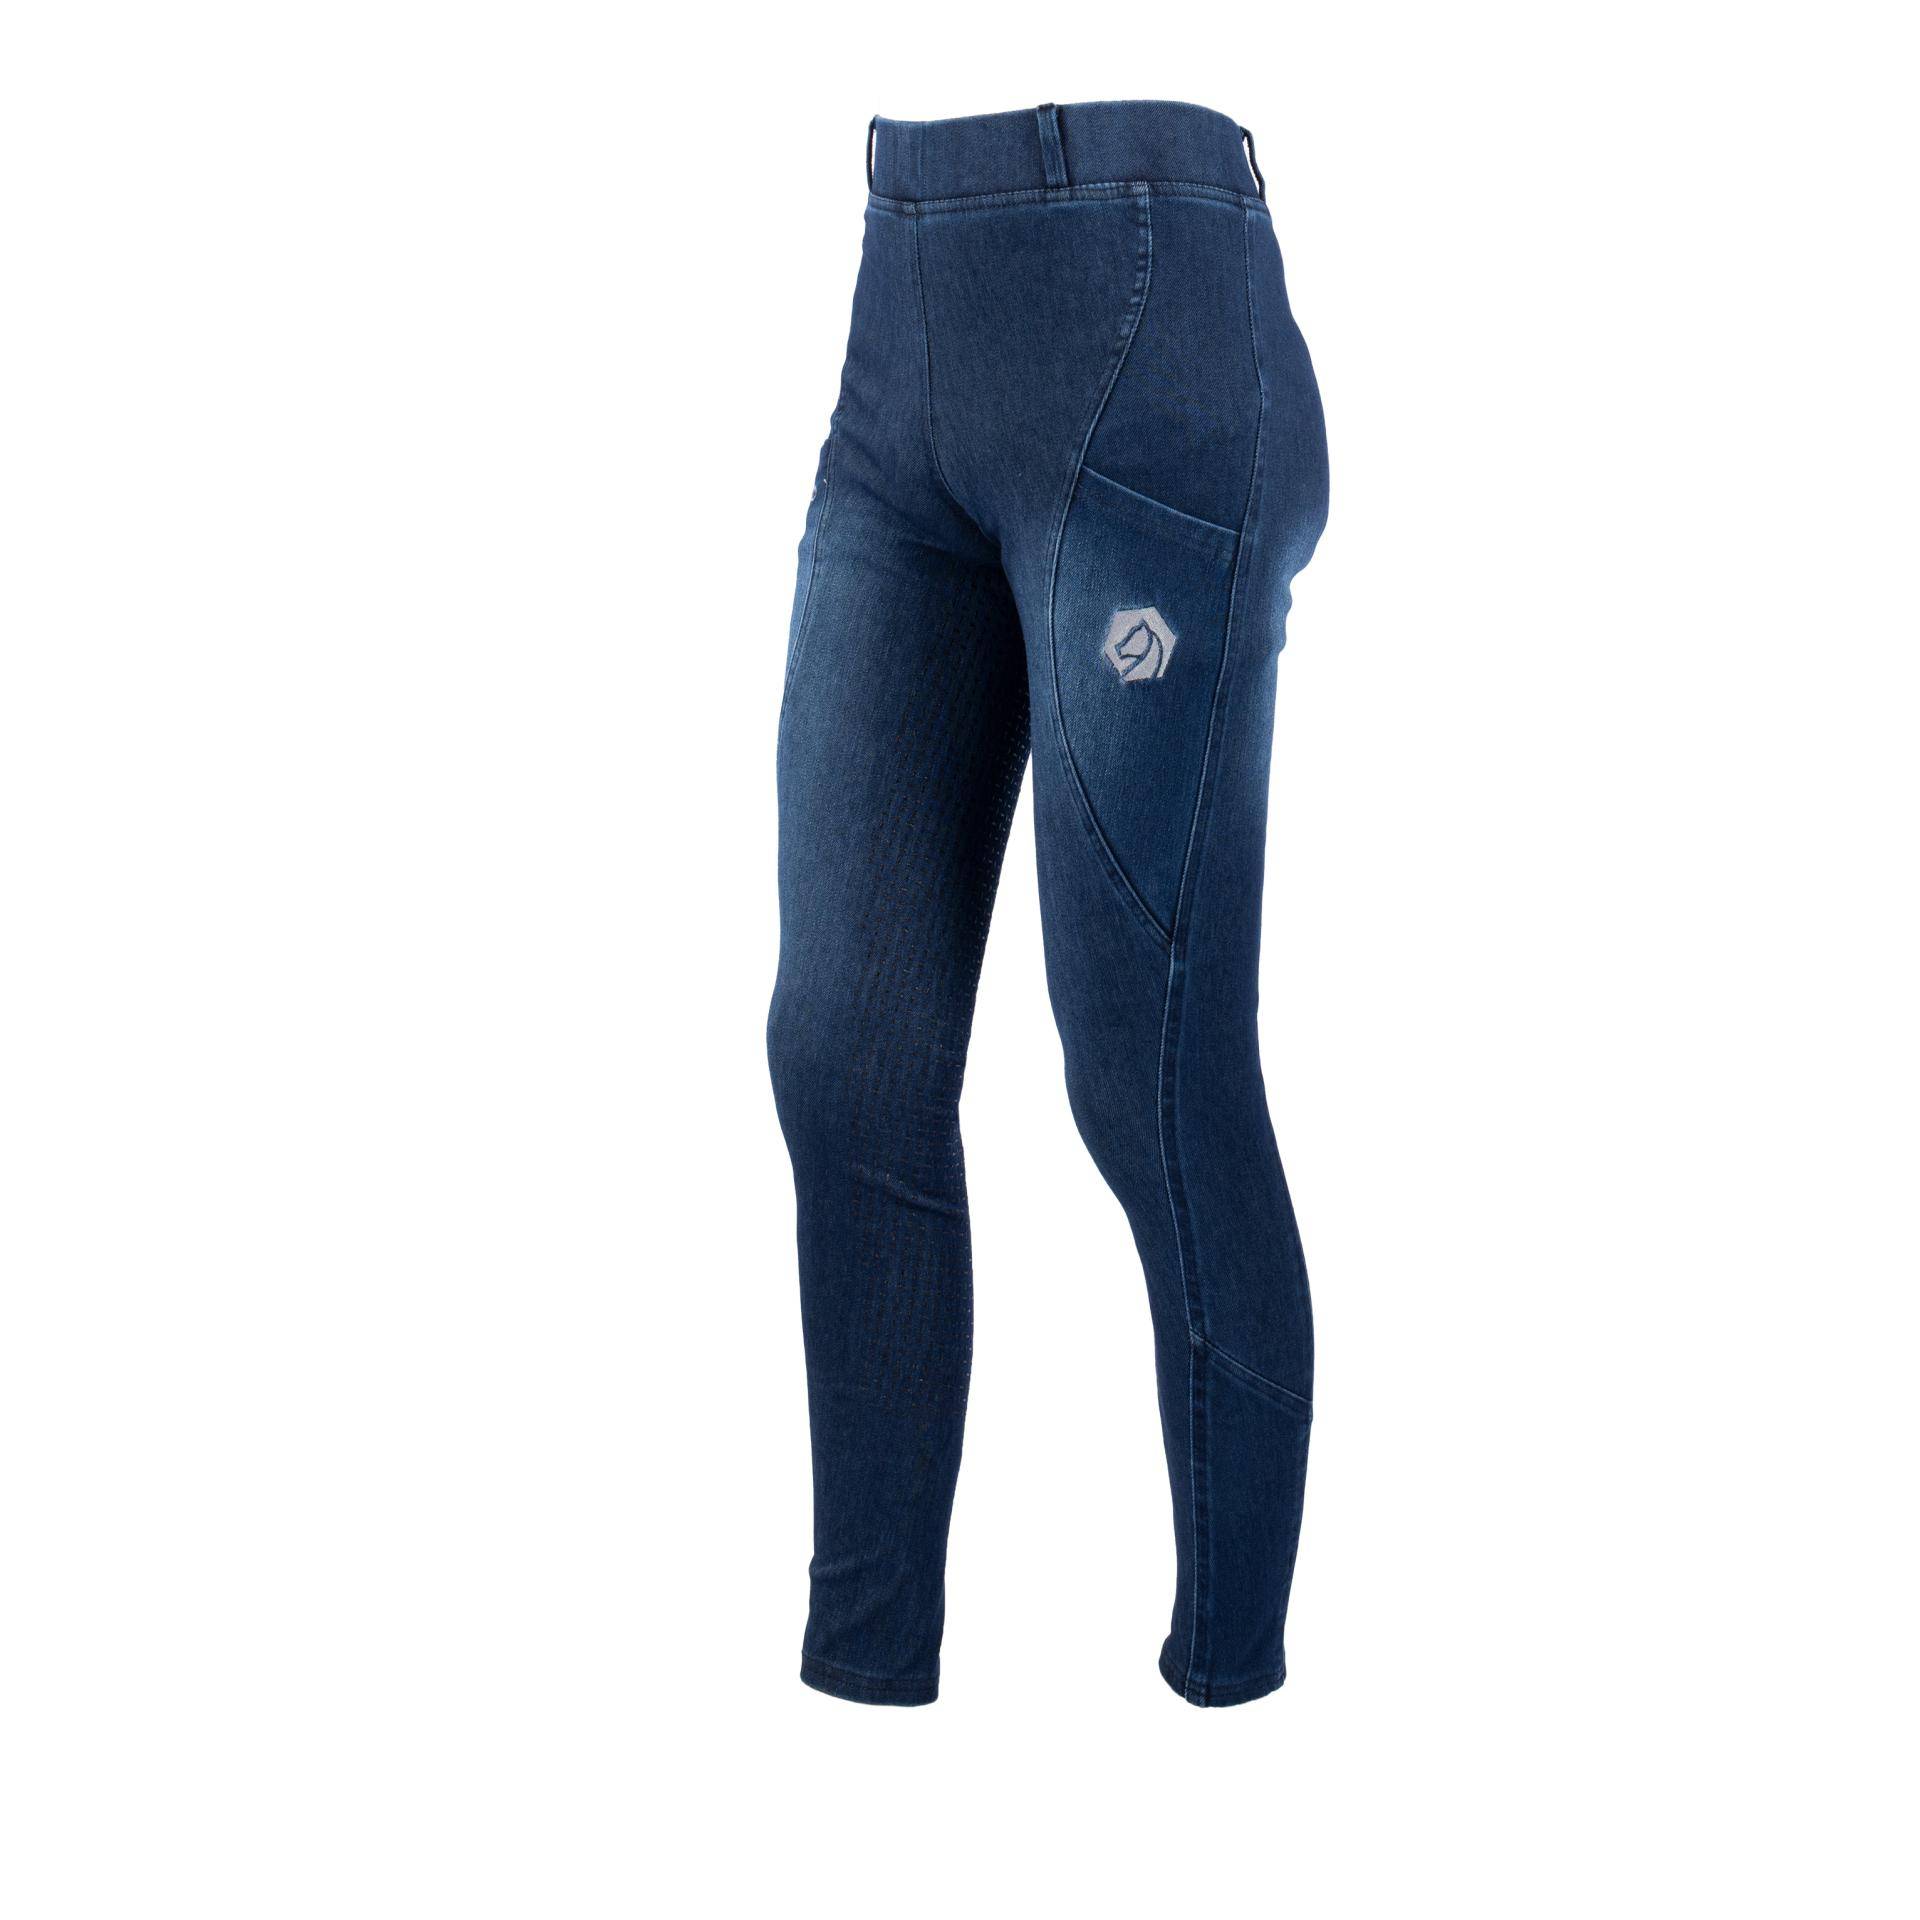 Marengo Reitleggings Jeans Fullgrip Damen Grösse Bekleidung Damen: XXL, Farbe: Dark Denim von Marengo